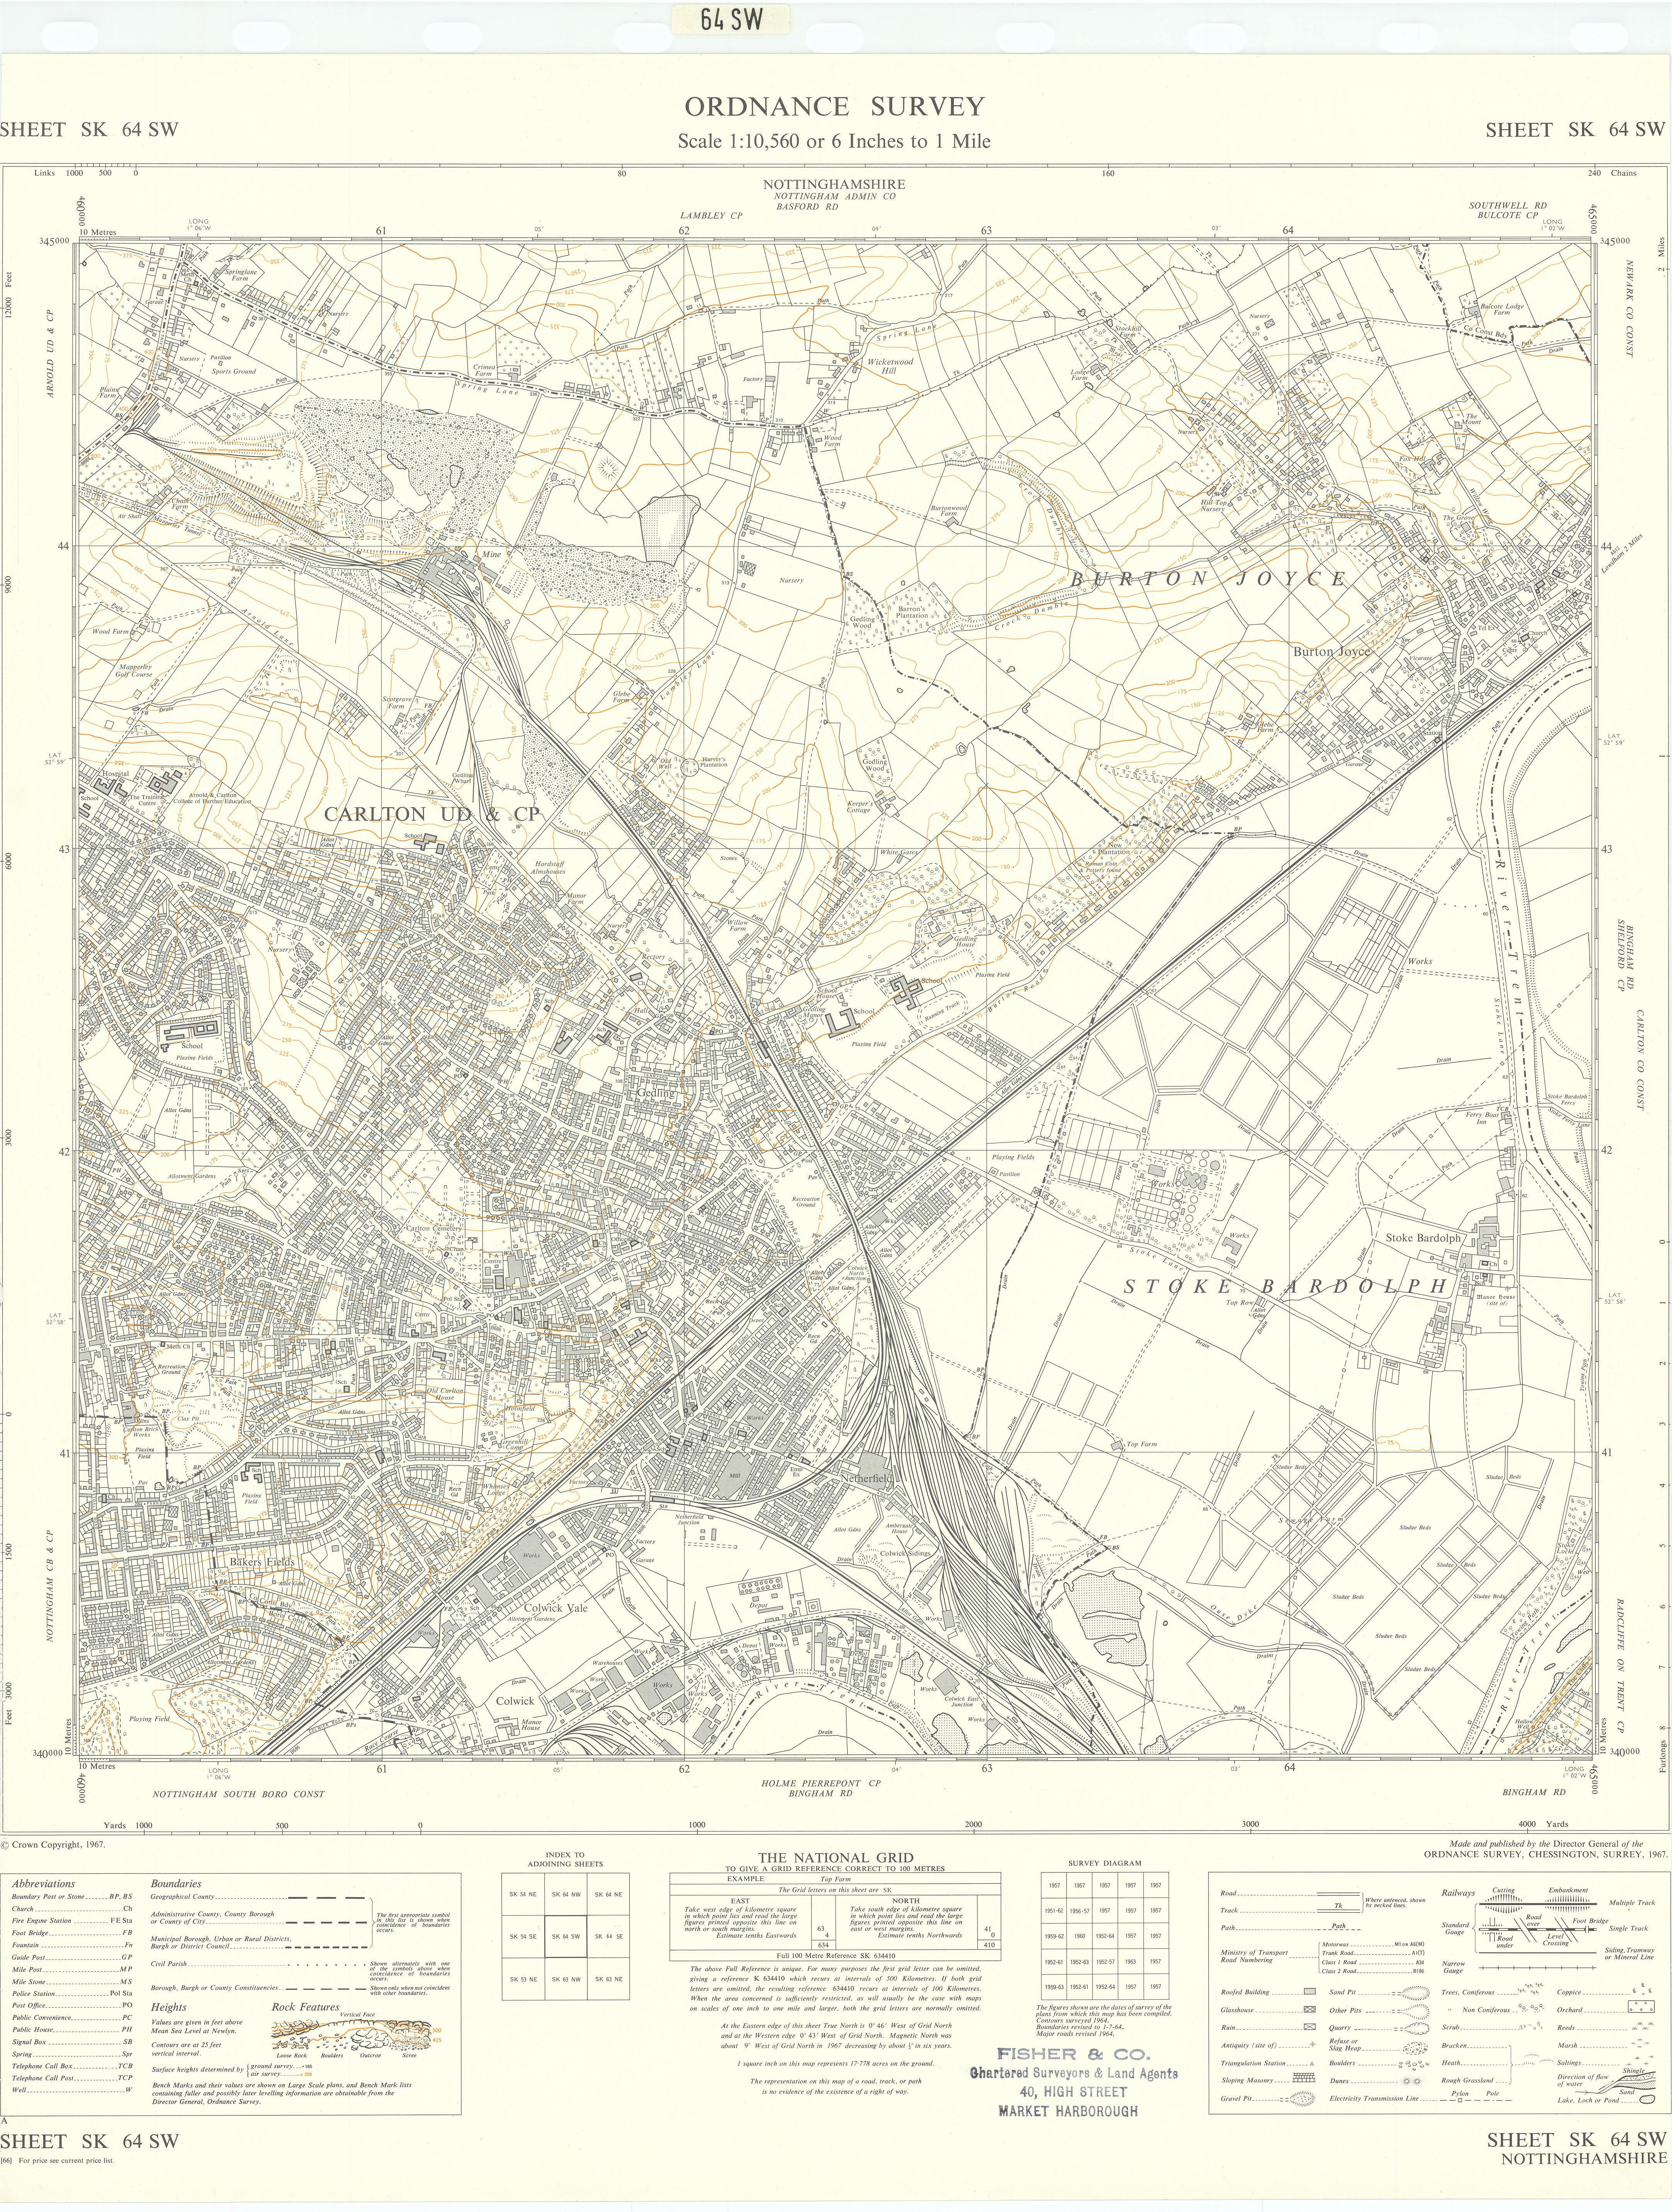 Ordnance Survey SK64SW Notts Carlton Burton Joyce Stoke Bardolph 1967 old map